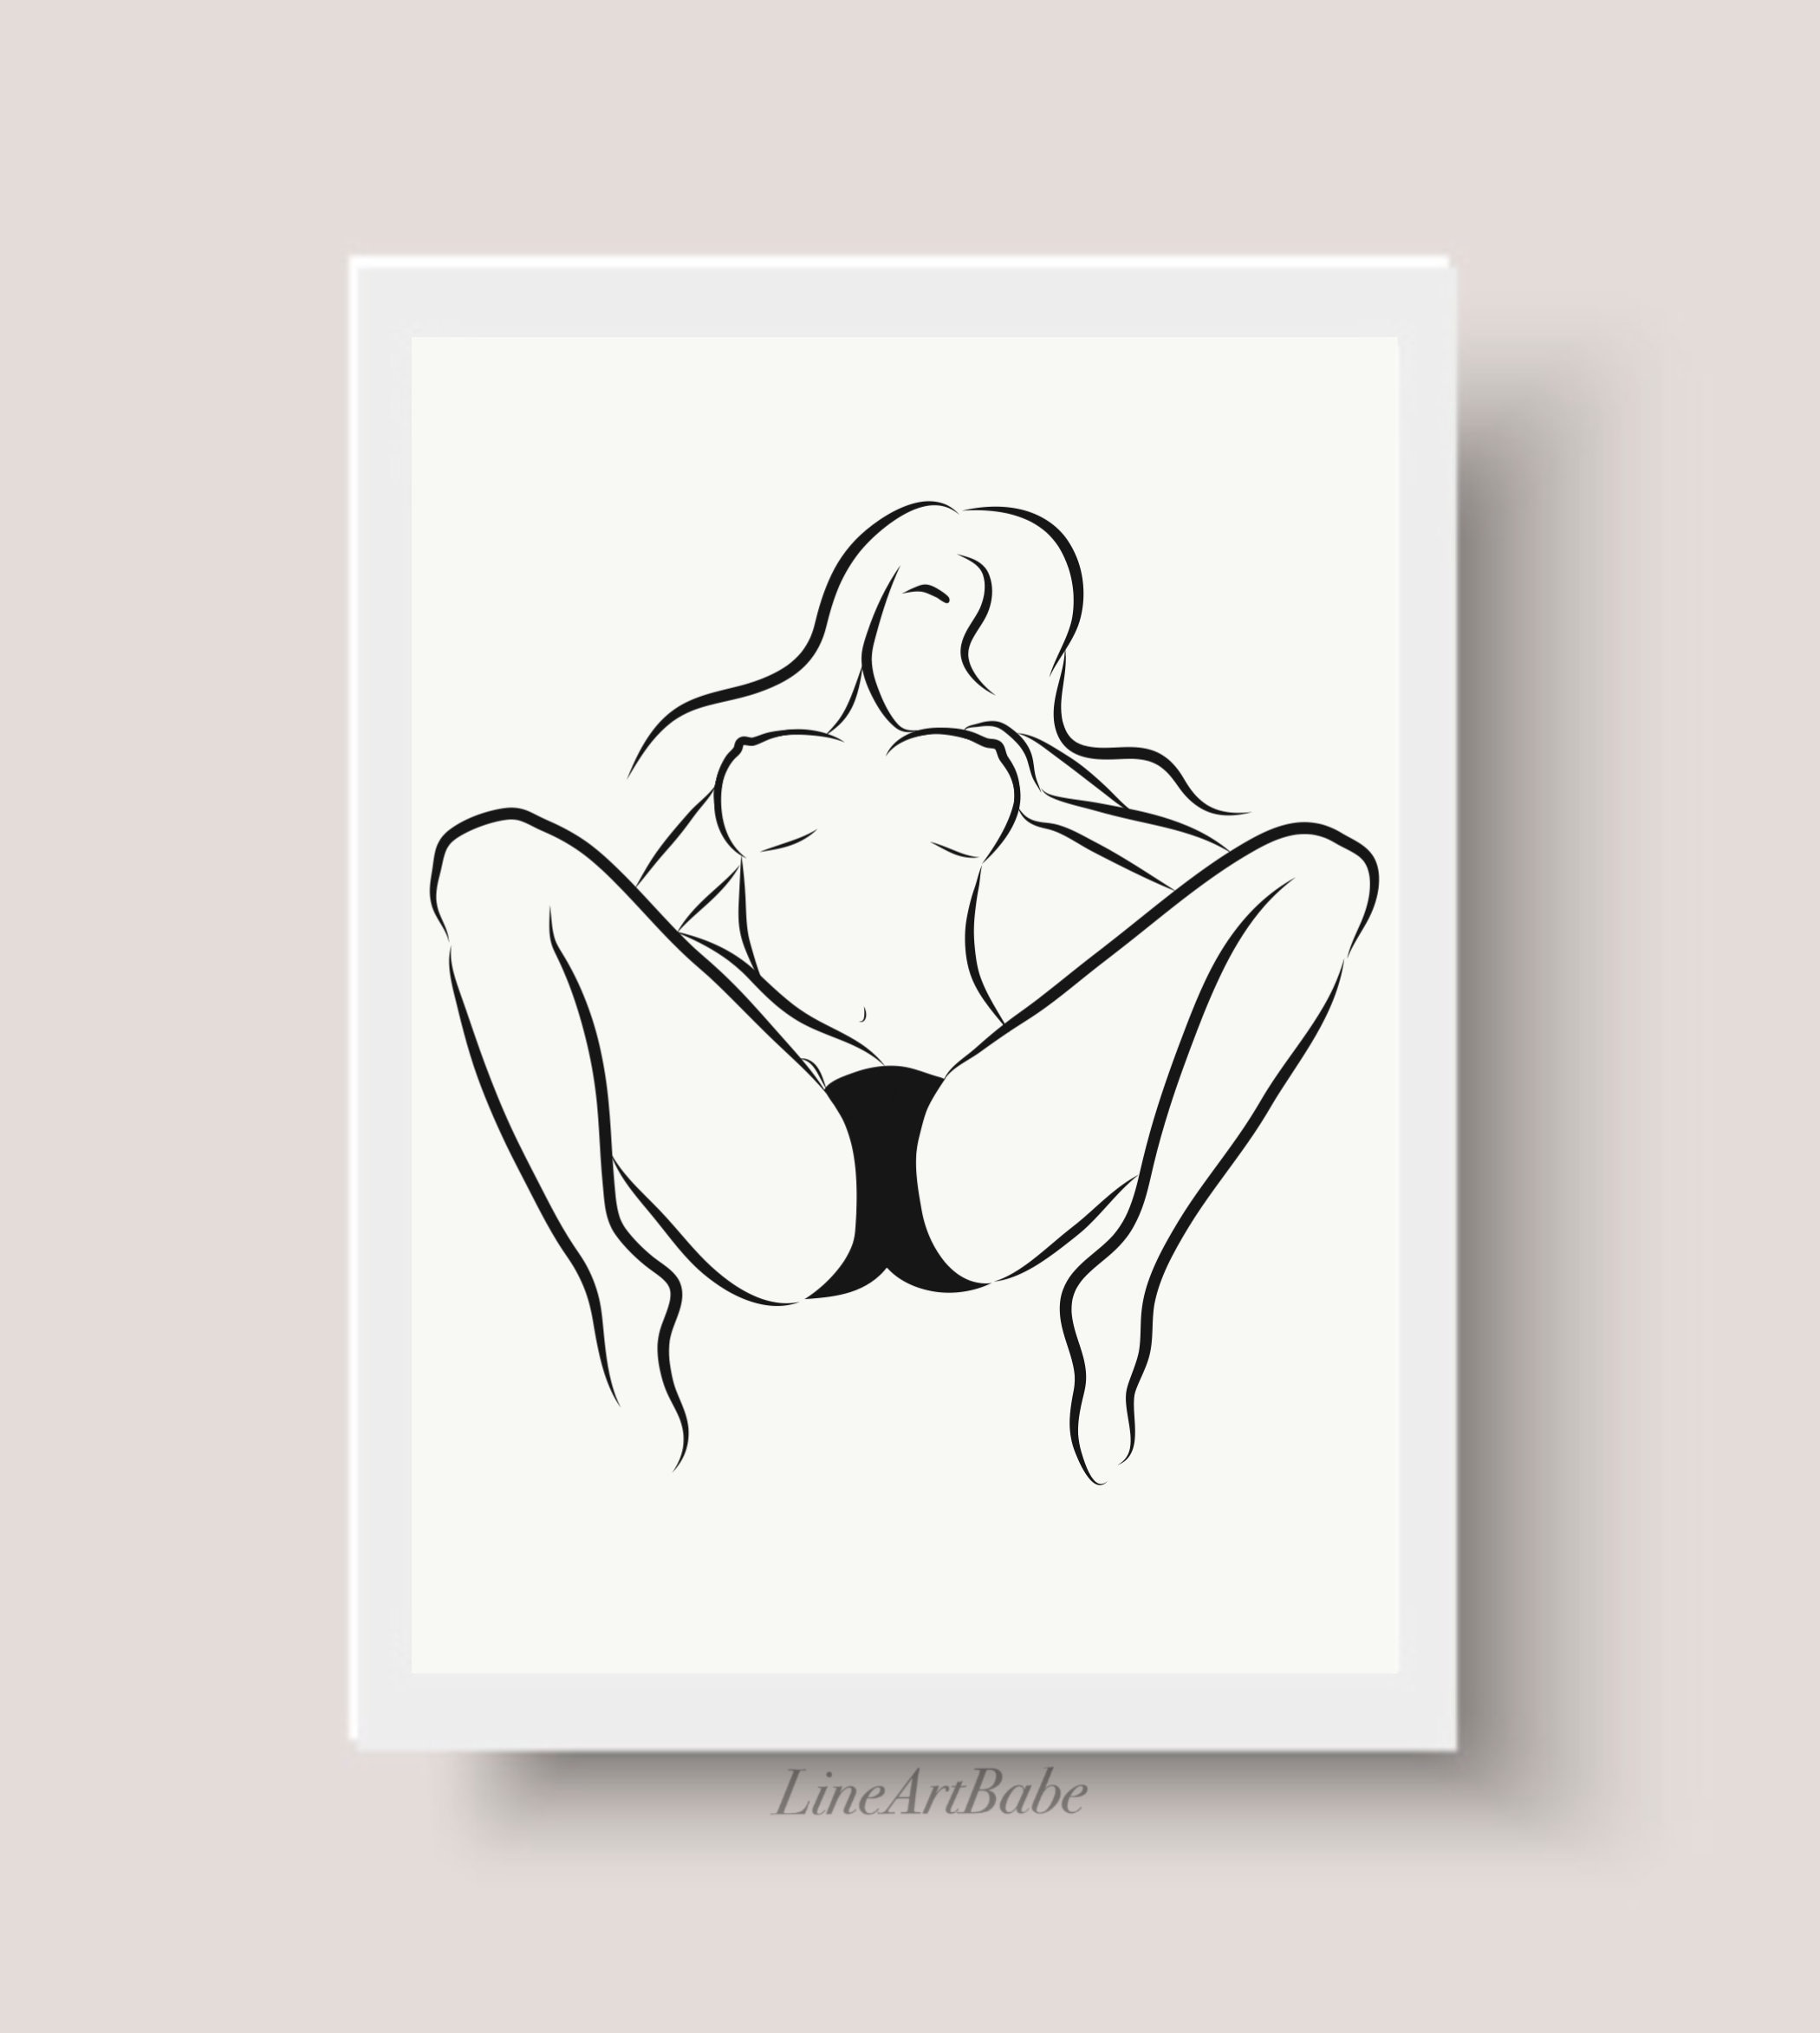 Sexy Line Art Print Woman Touching Herself Drawing image